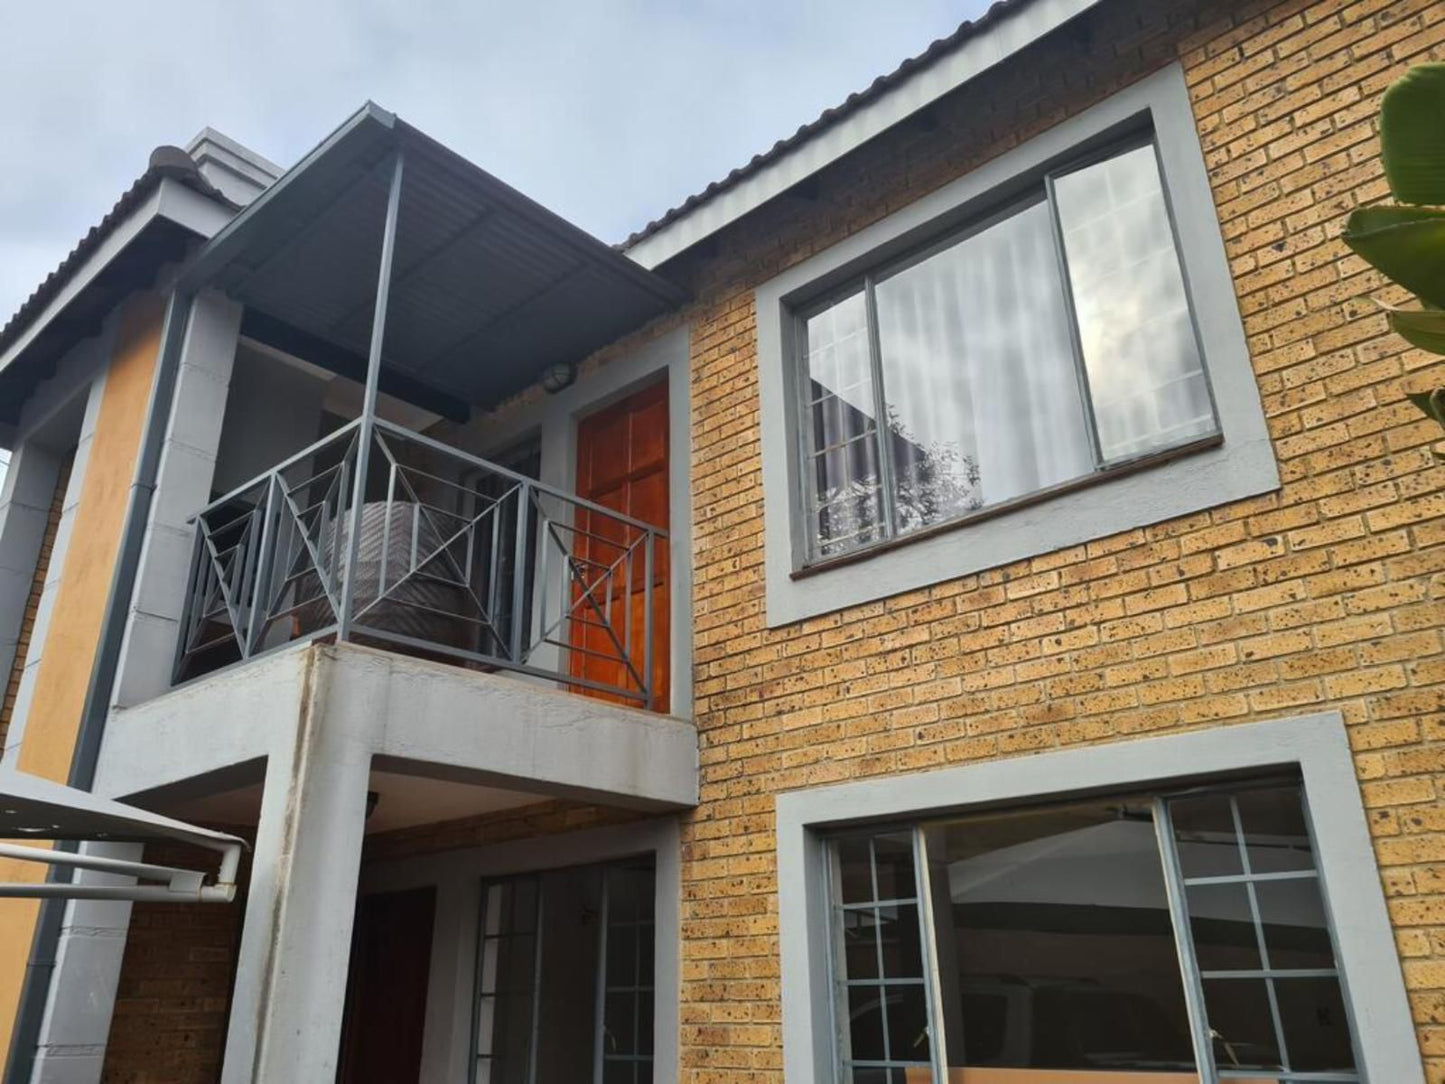 Villa Casa Nelspruit Mpumalanga South Africa Balcony, Architecture, House, Building